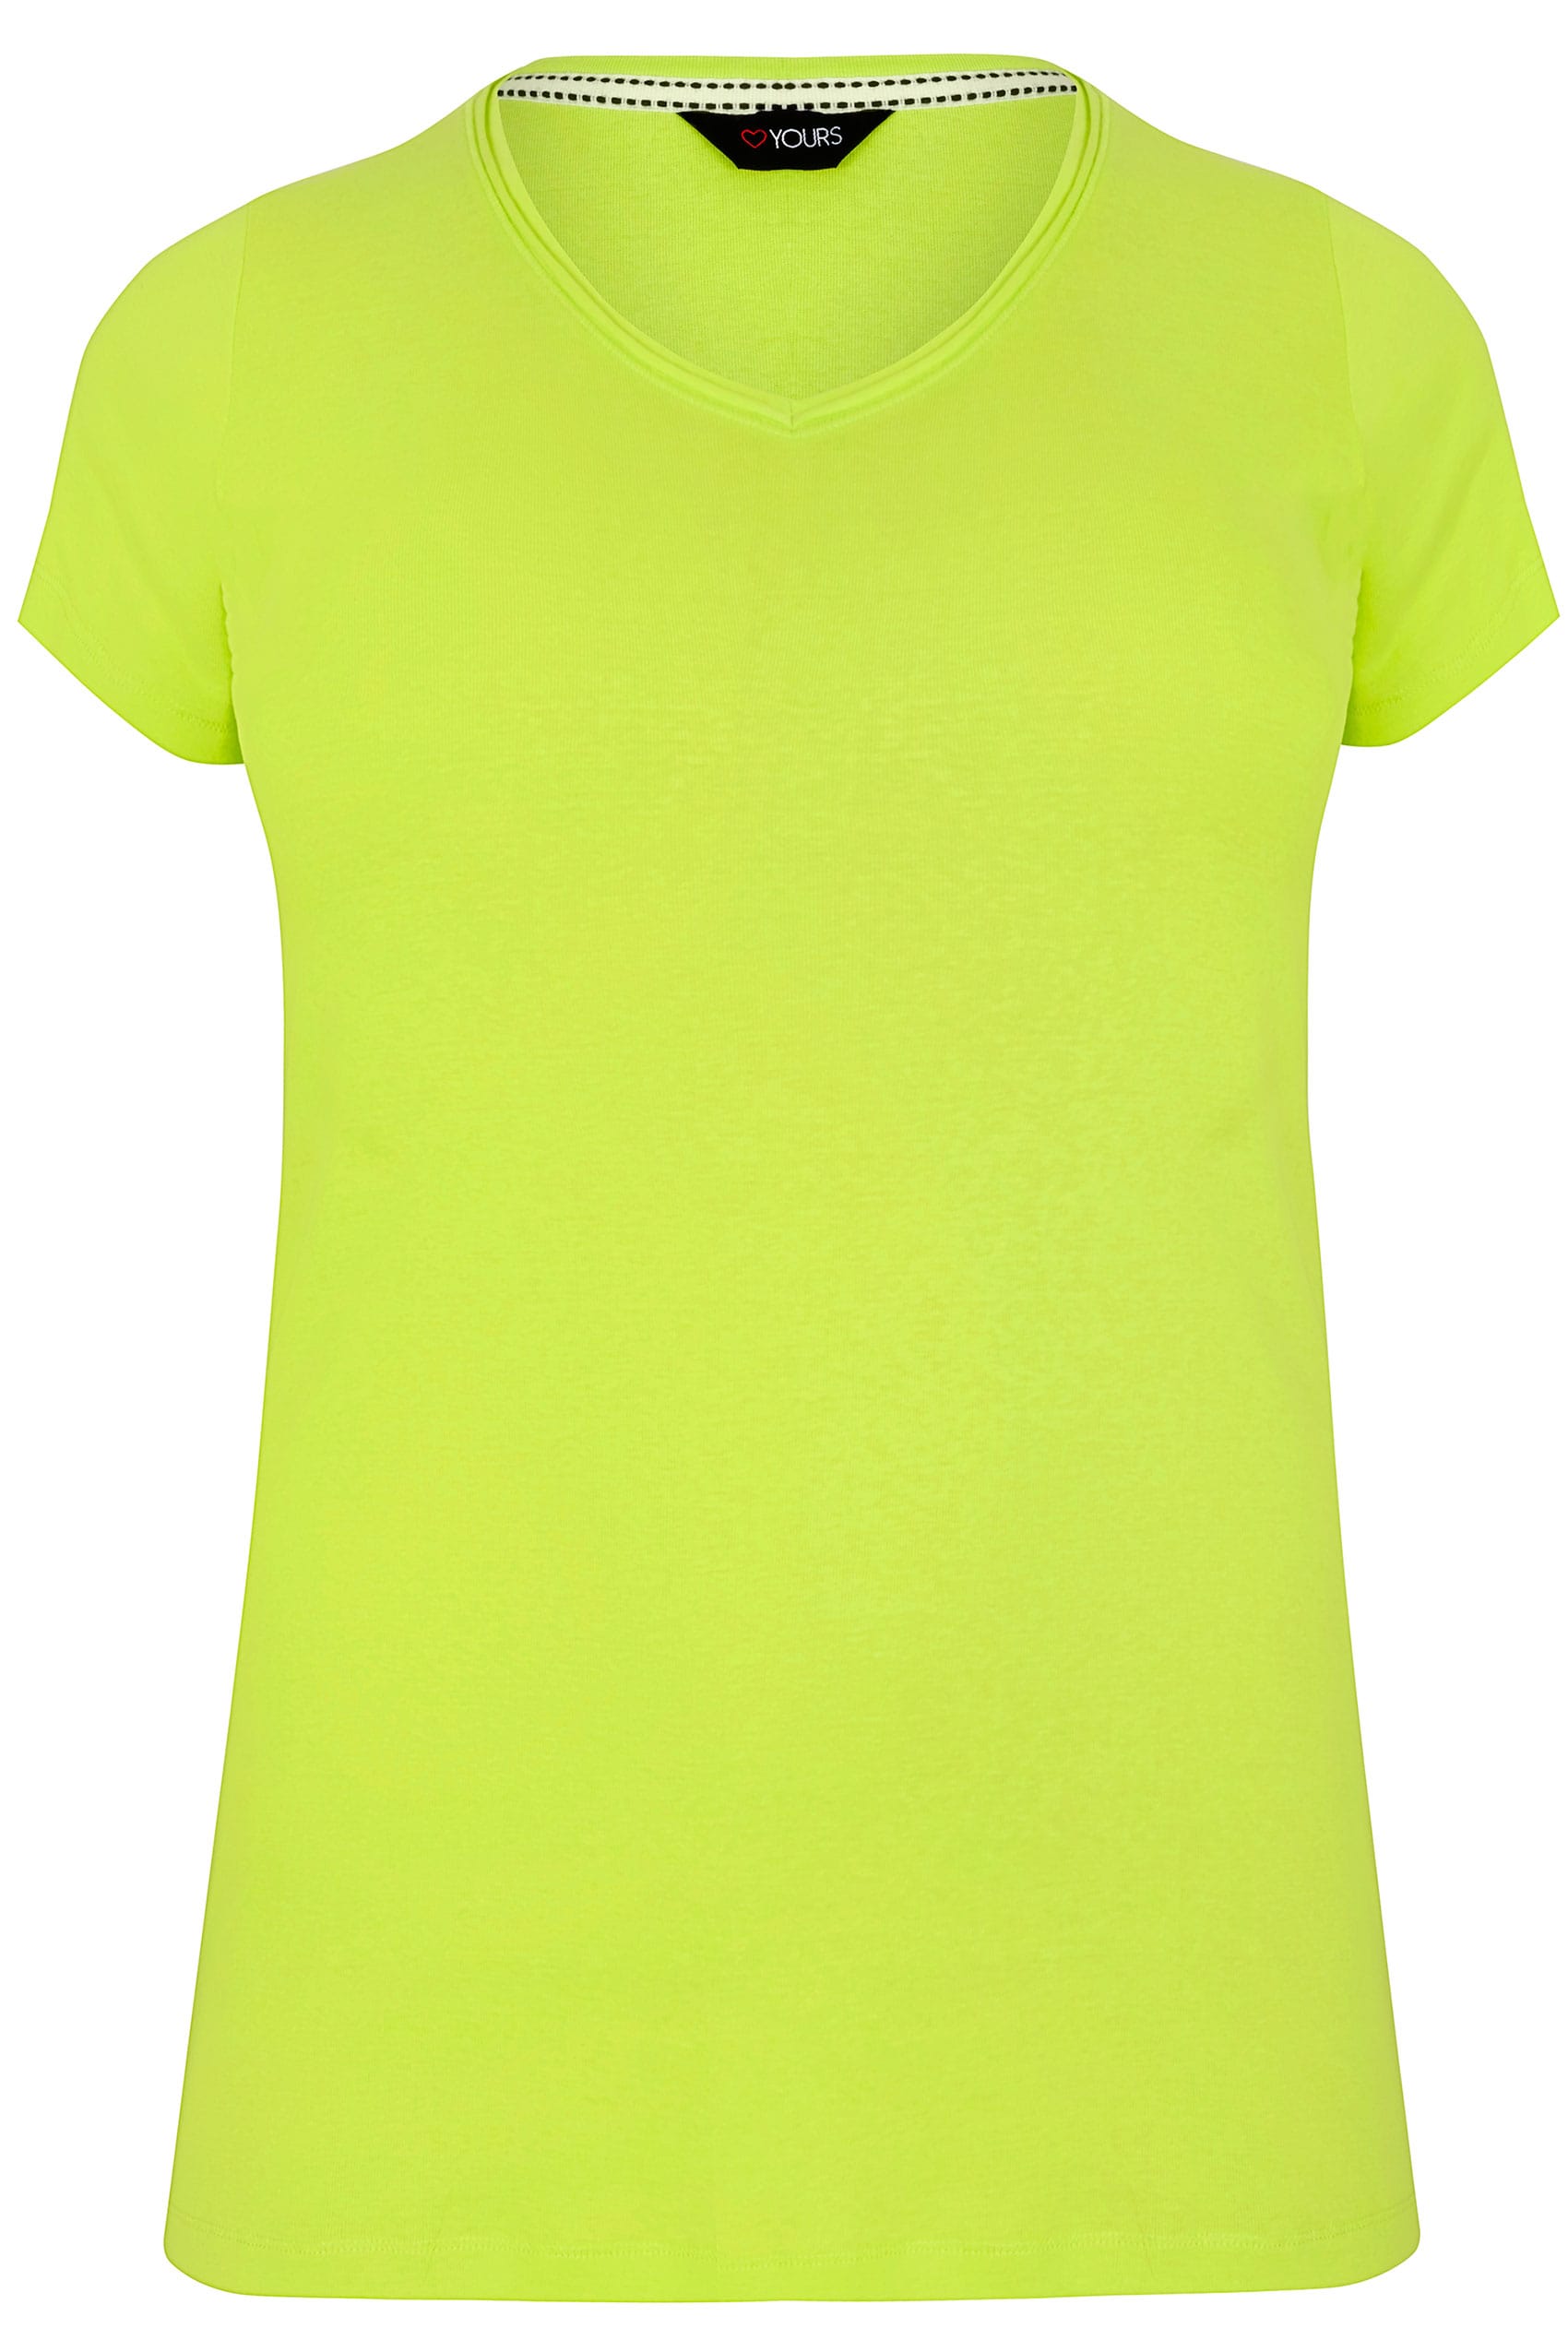 Lime Green Short Sleeved V-Neck Basic T-Shirt, plus size 16 to 36